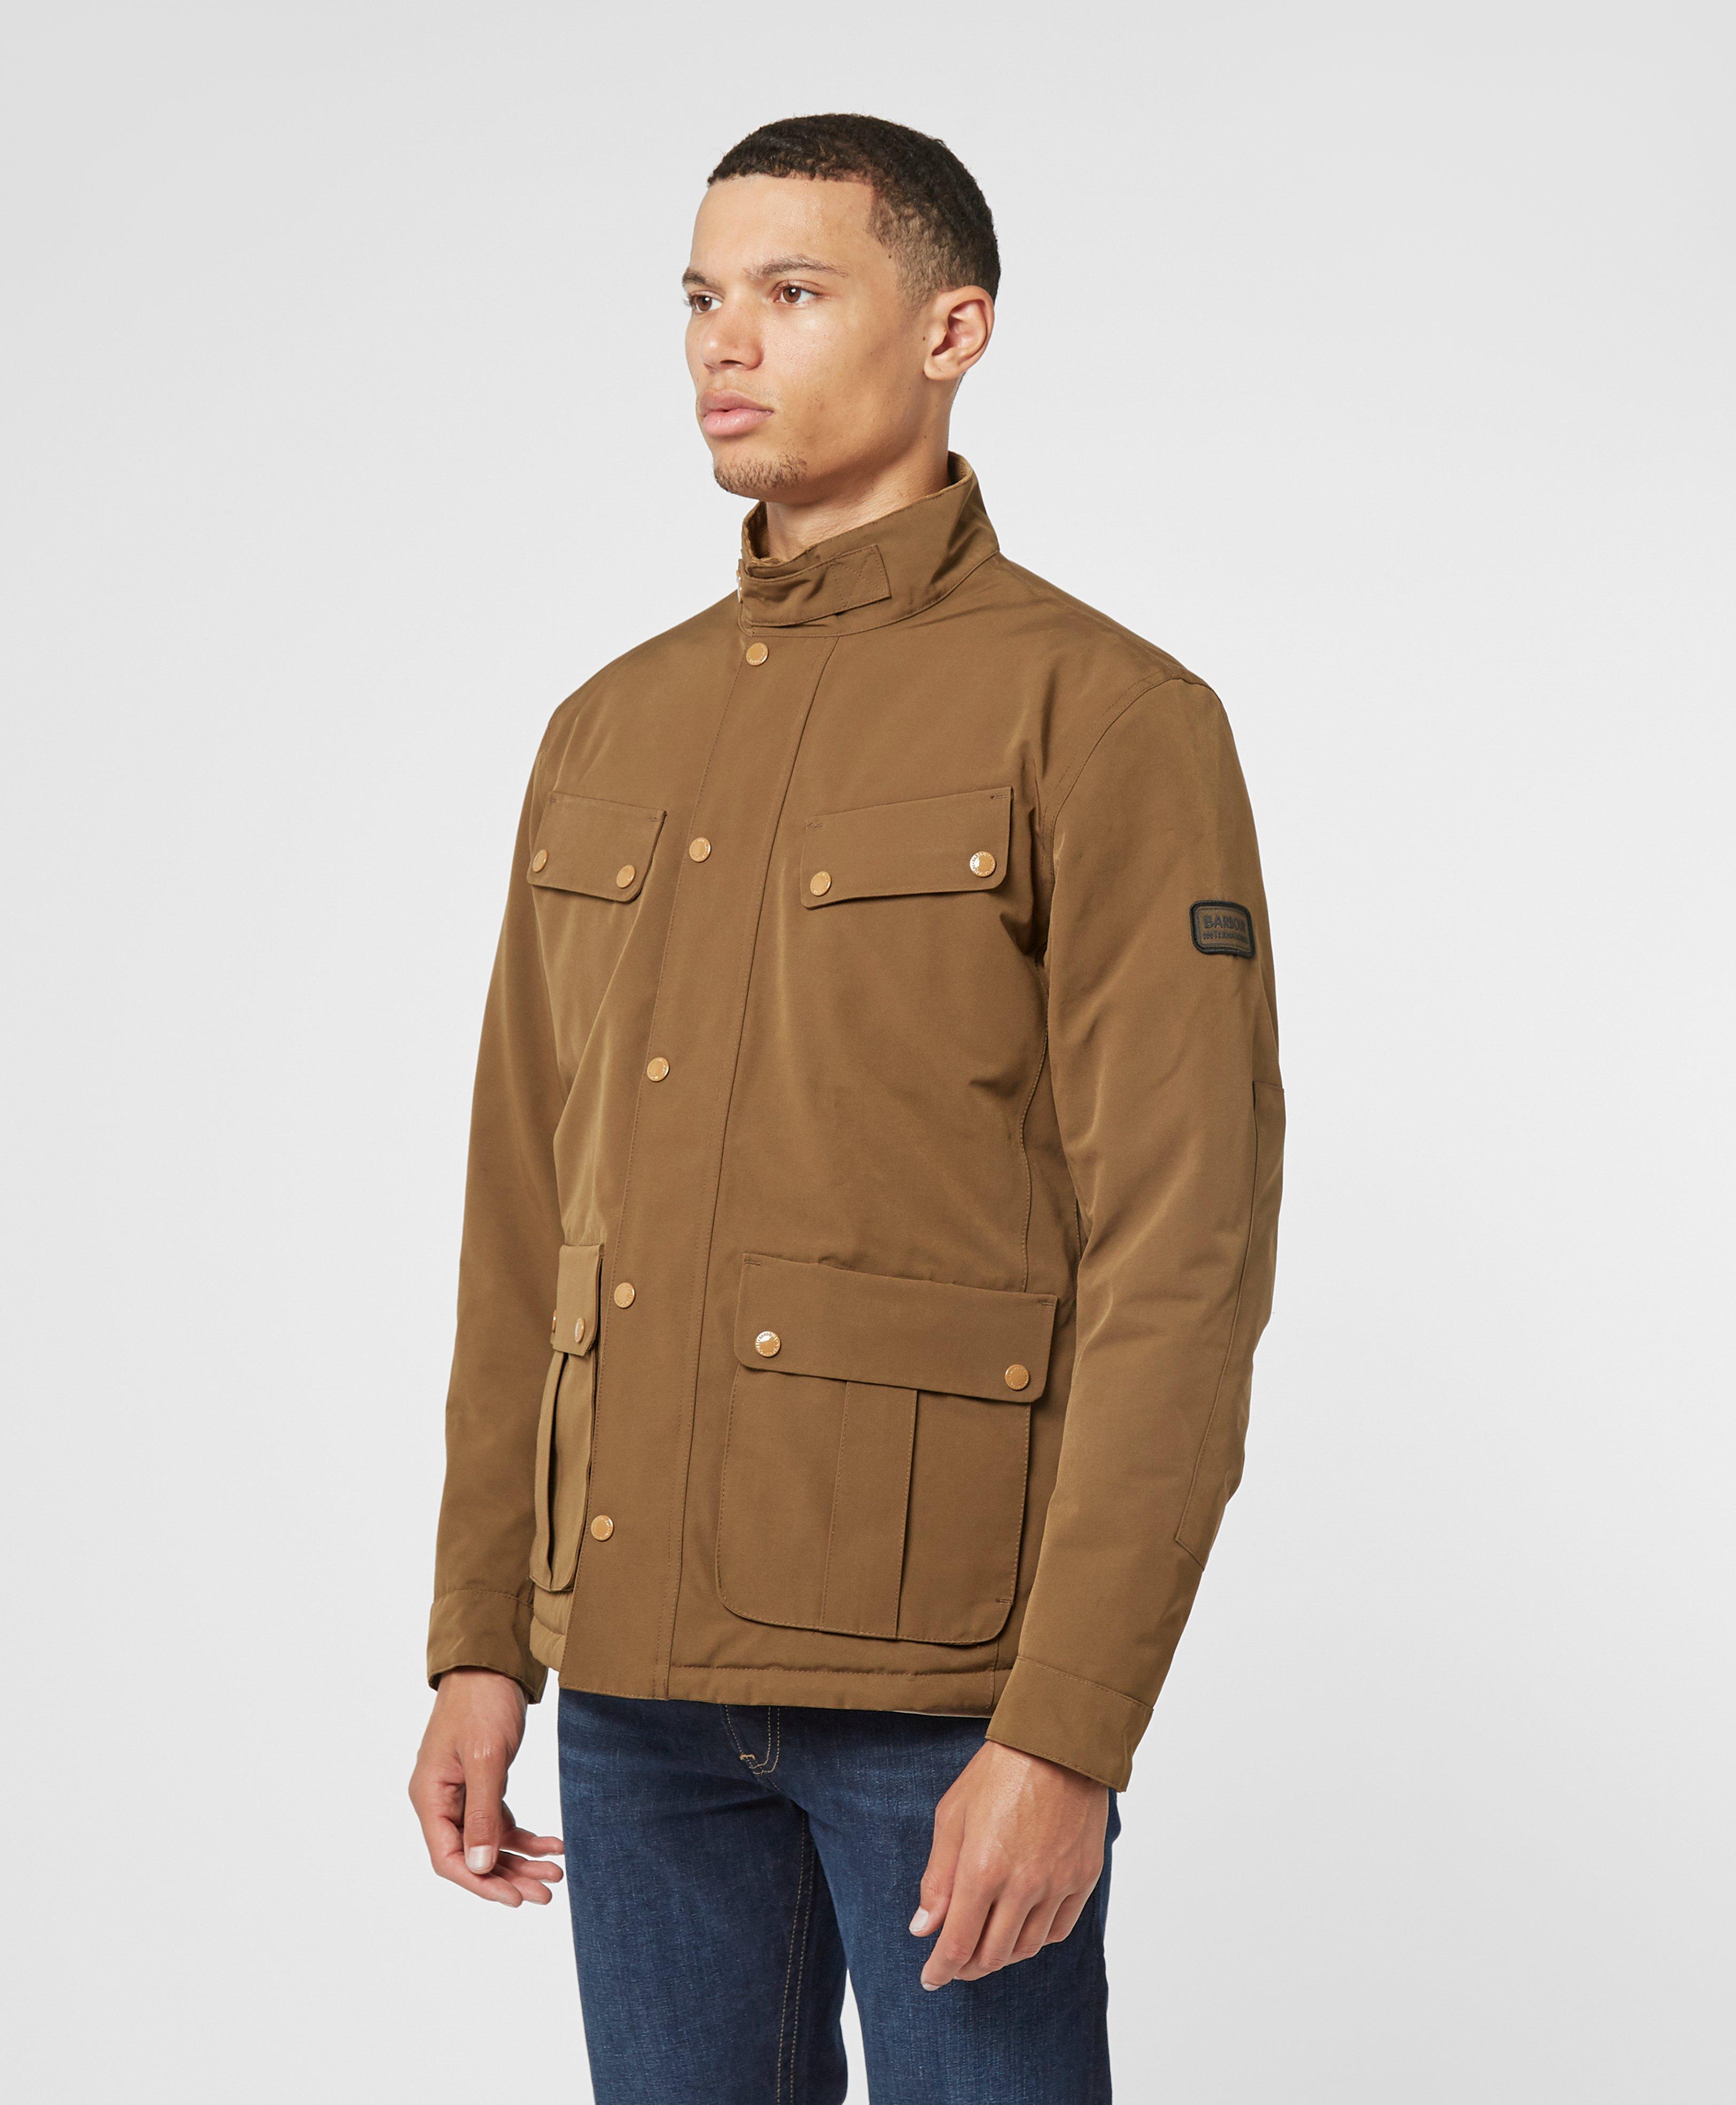 Barbour Waterproof Duke Jacket in Brown for Men - Lyst